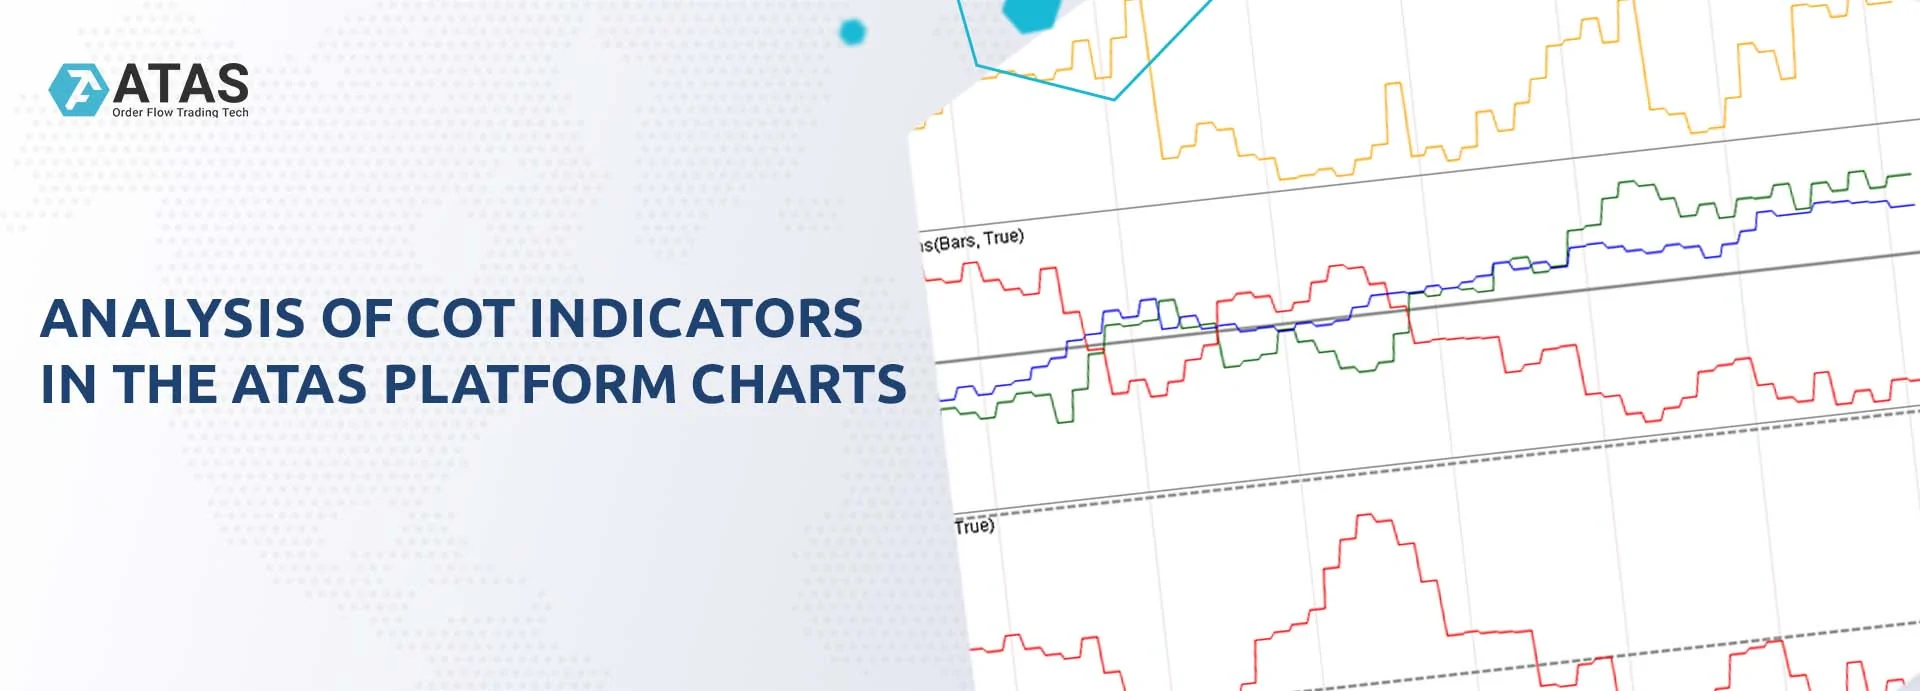 Analysis of COT indicators in the ATAS platform charts